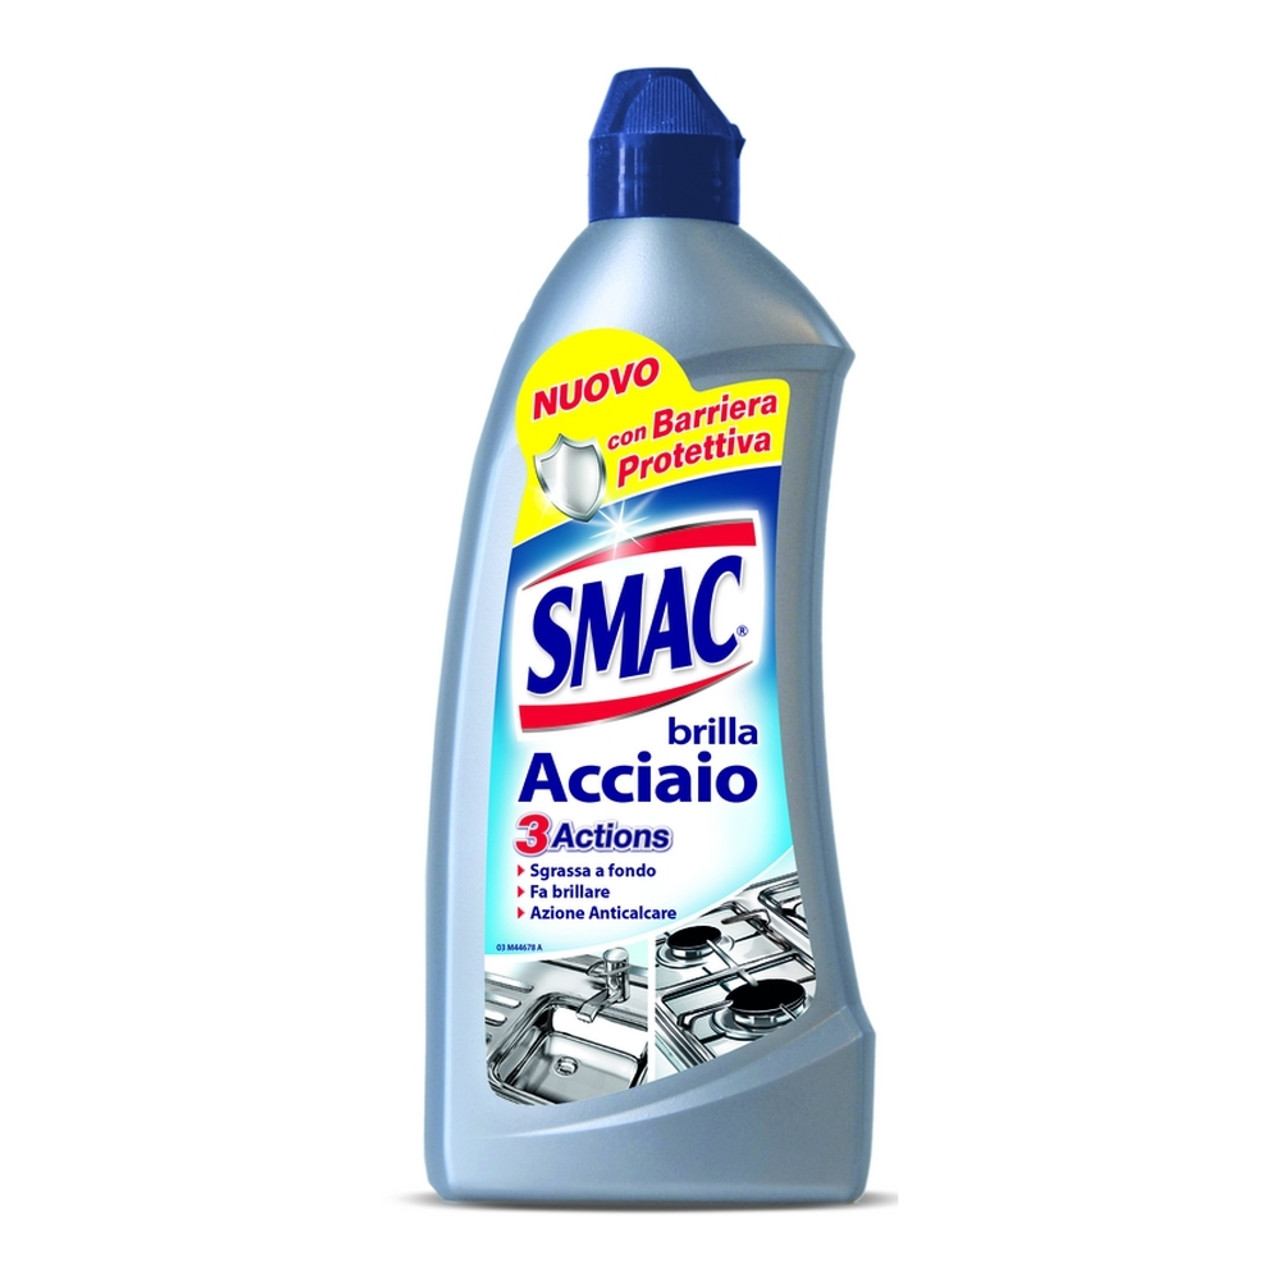 Smac - Acciaio Crema Ml520 - CZ Store